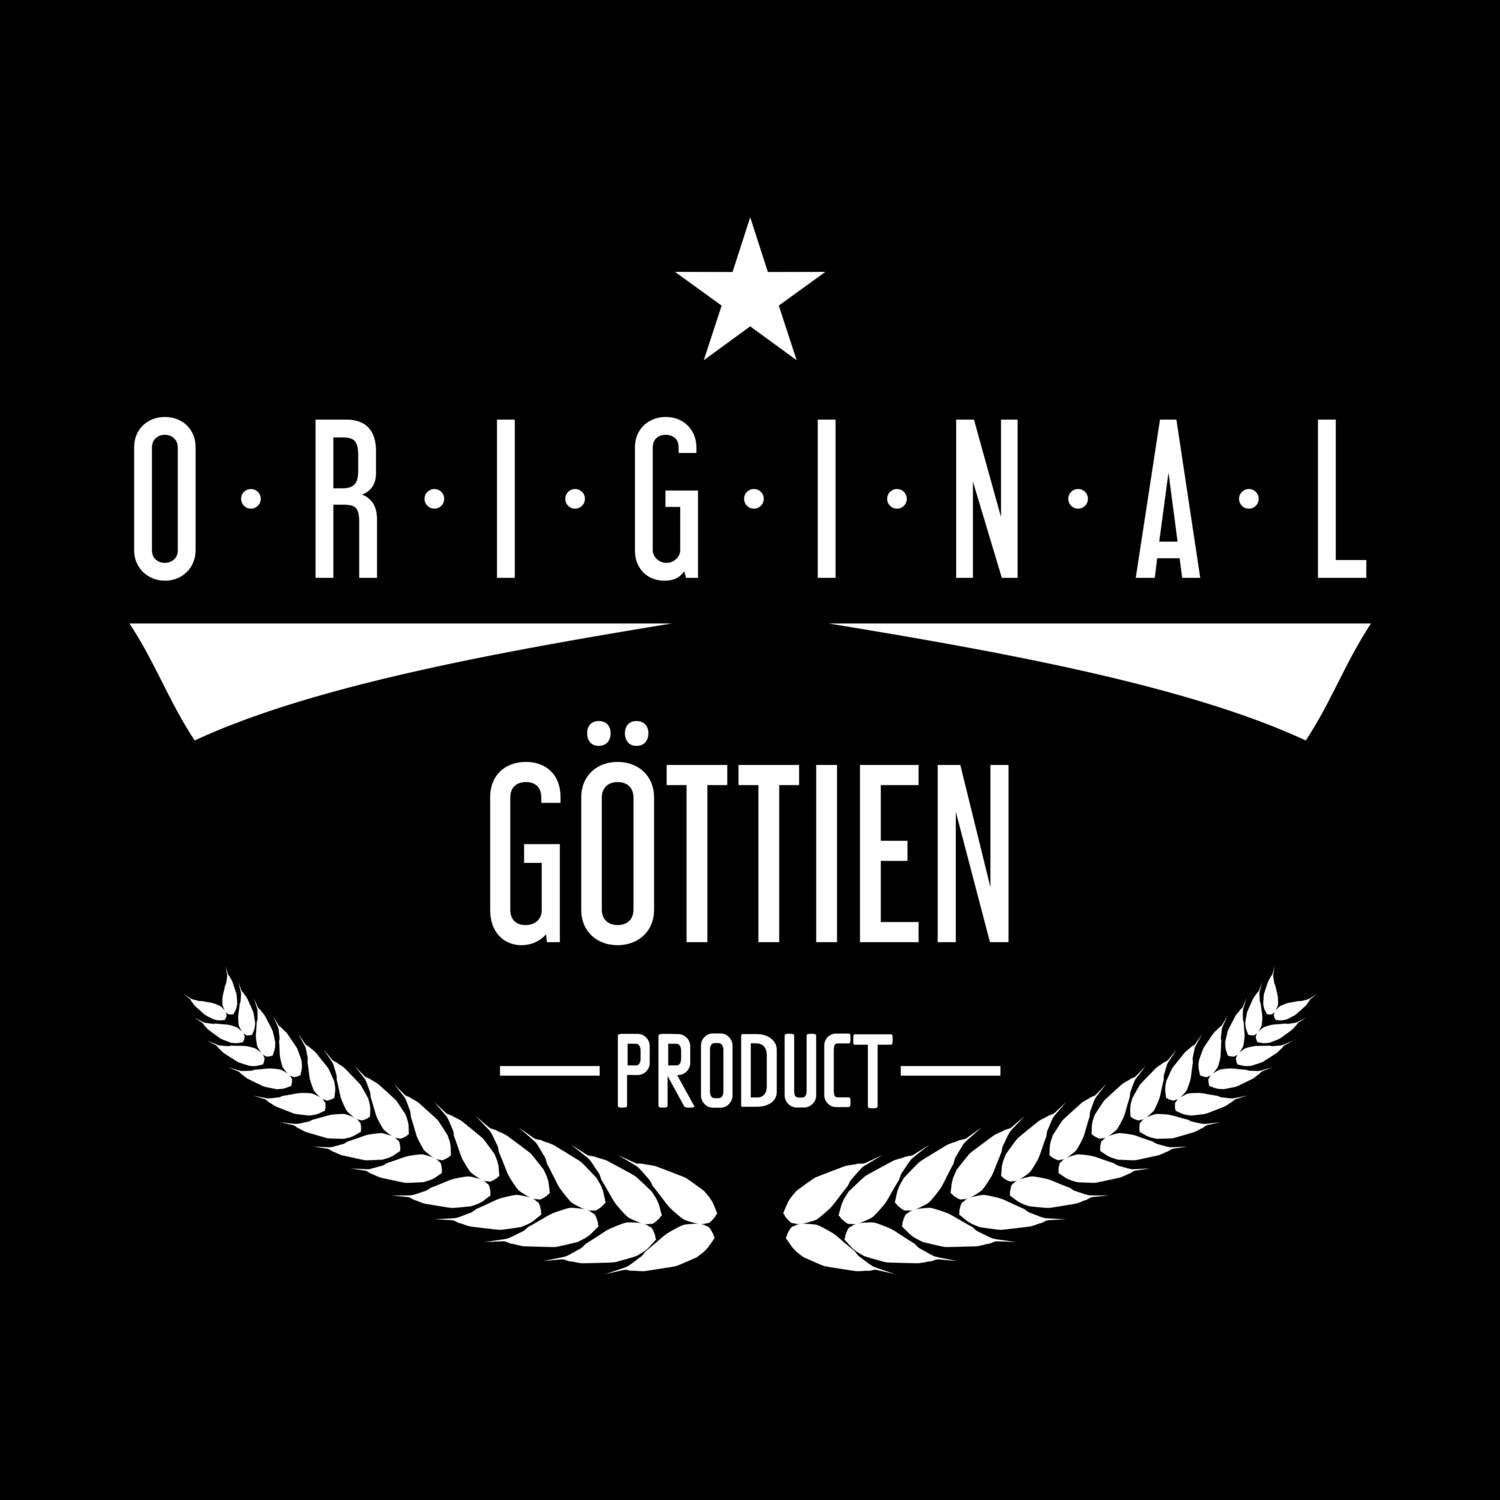 Göttien T-Shirt »Original Product«